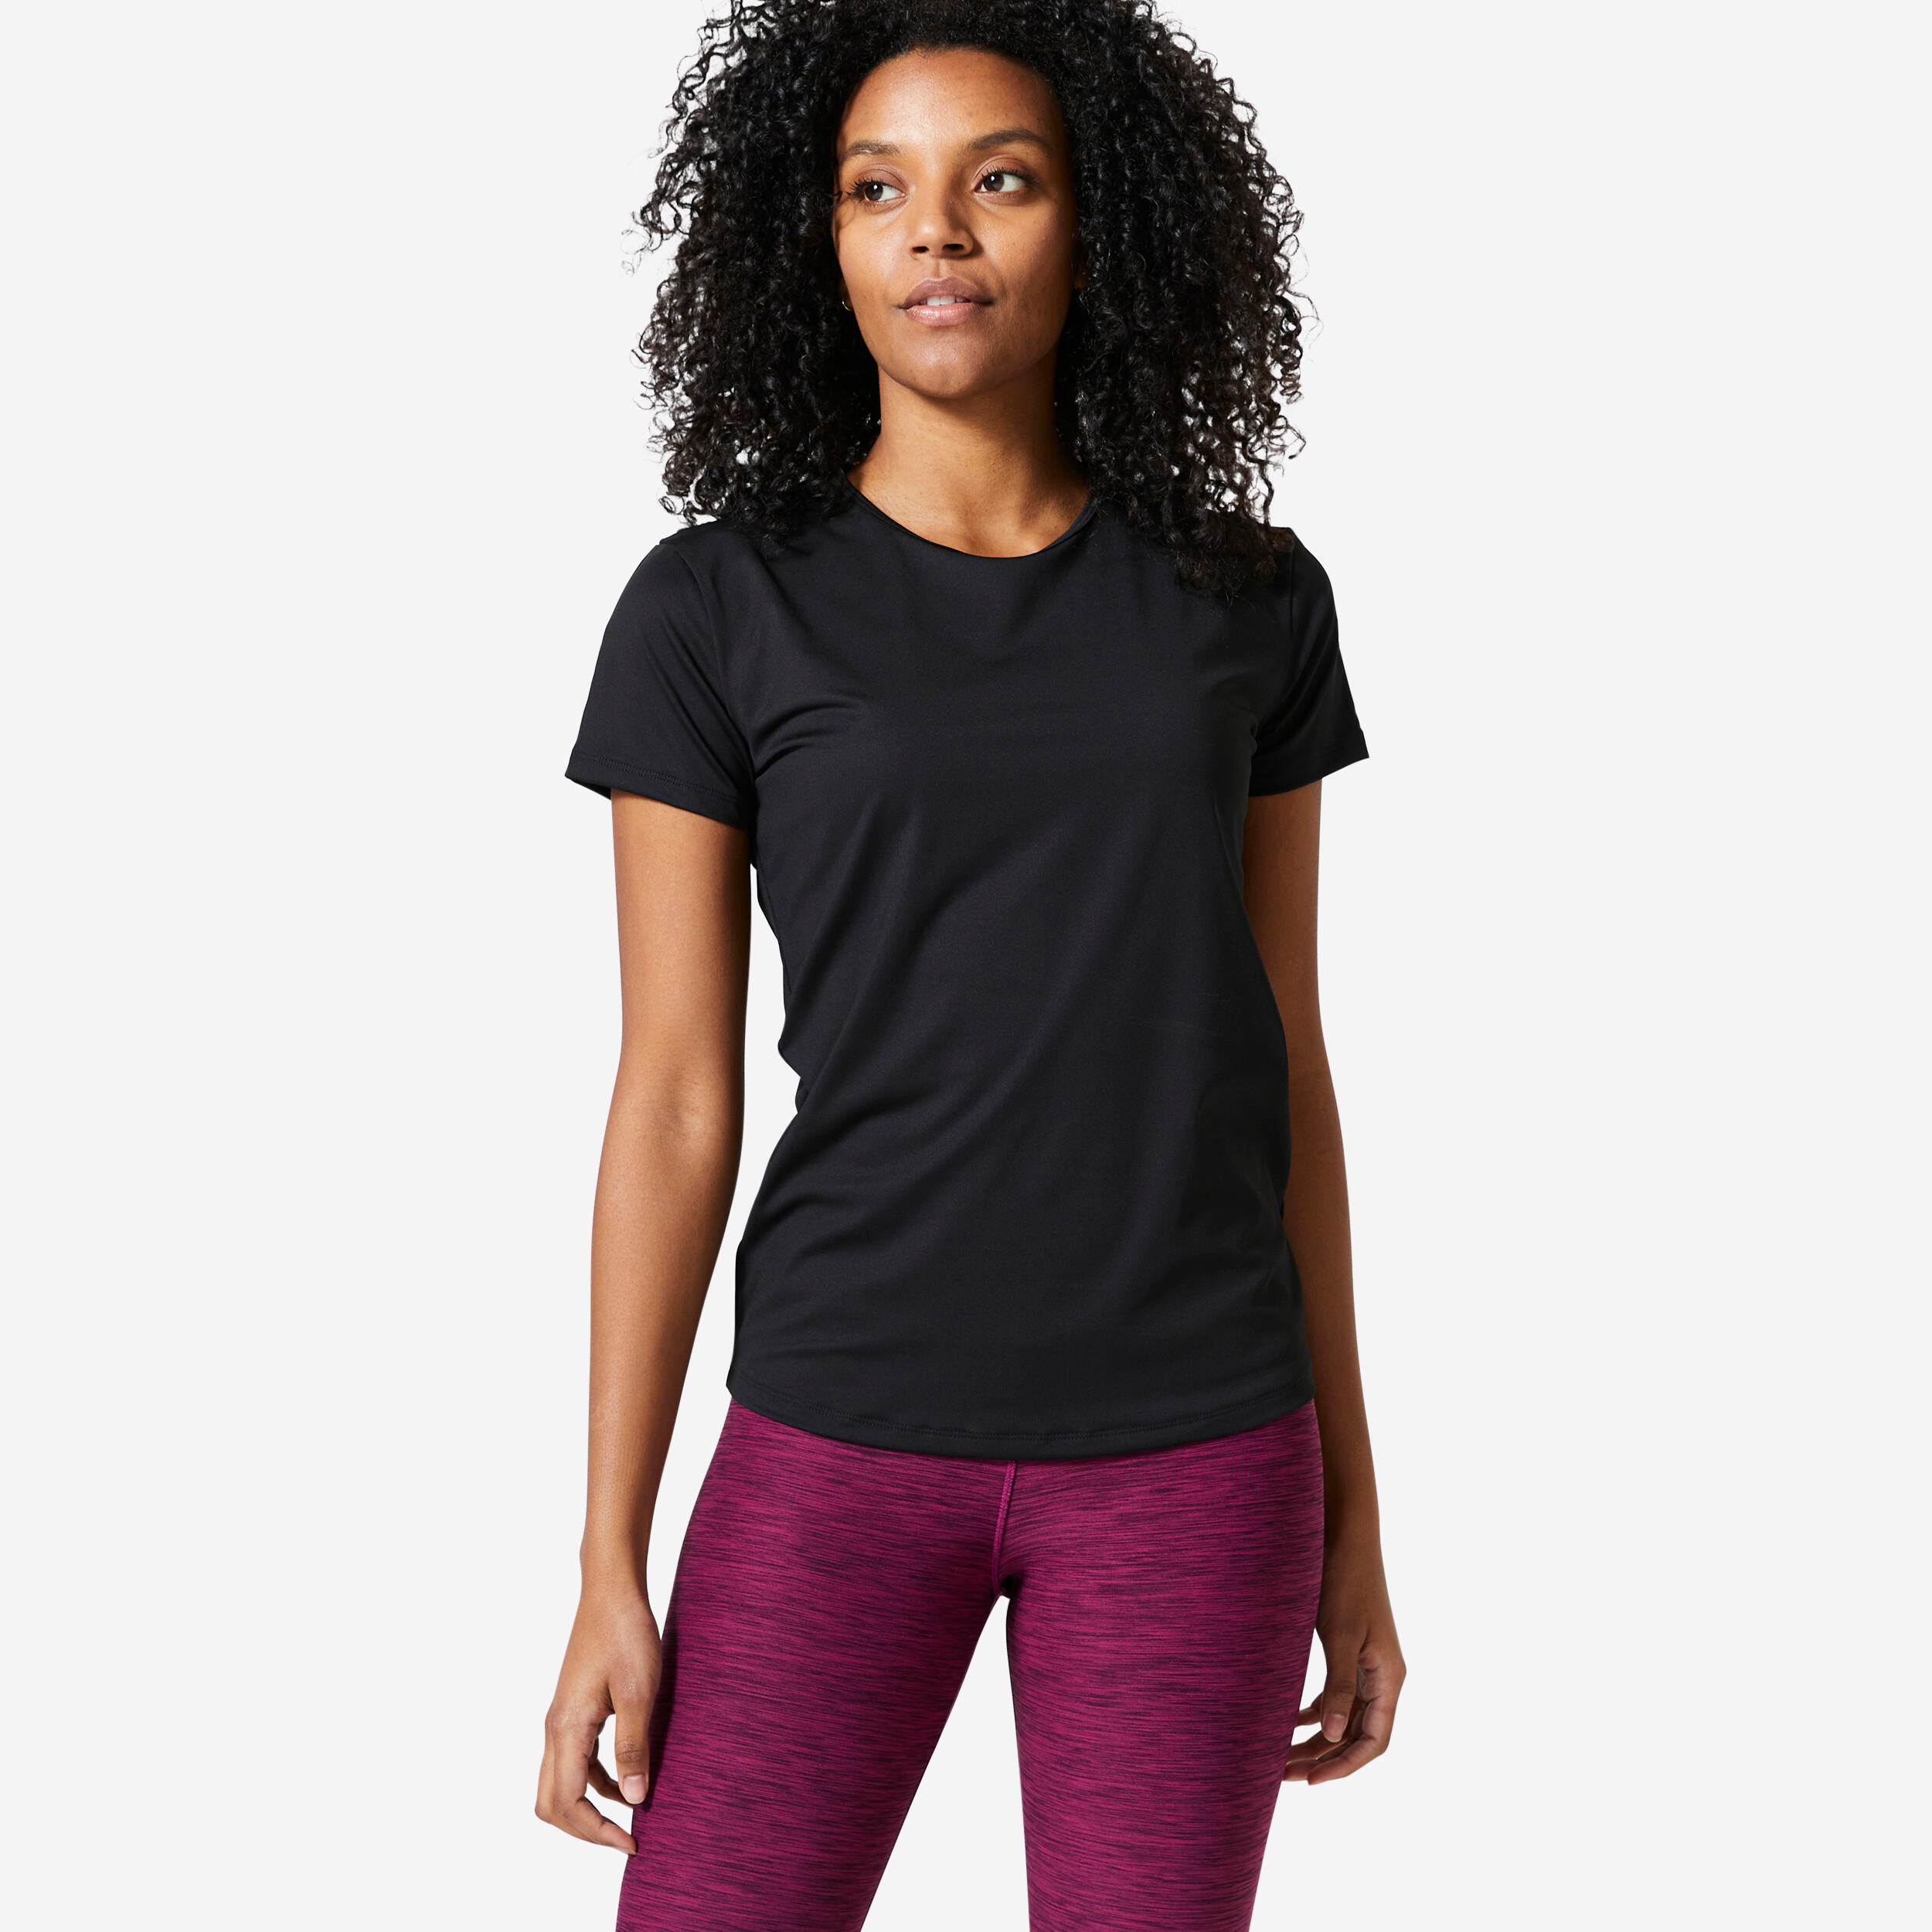 DOMYOS Women's Short-Sleeved Cardio Fitness T-Shirt - Black